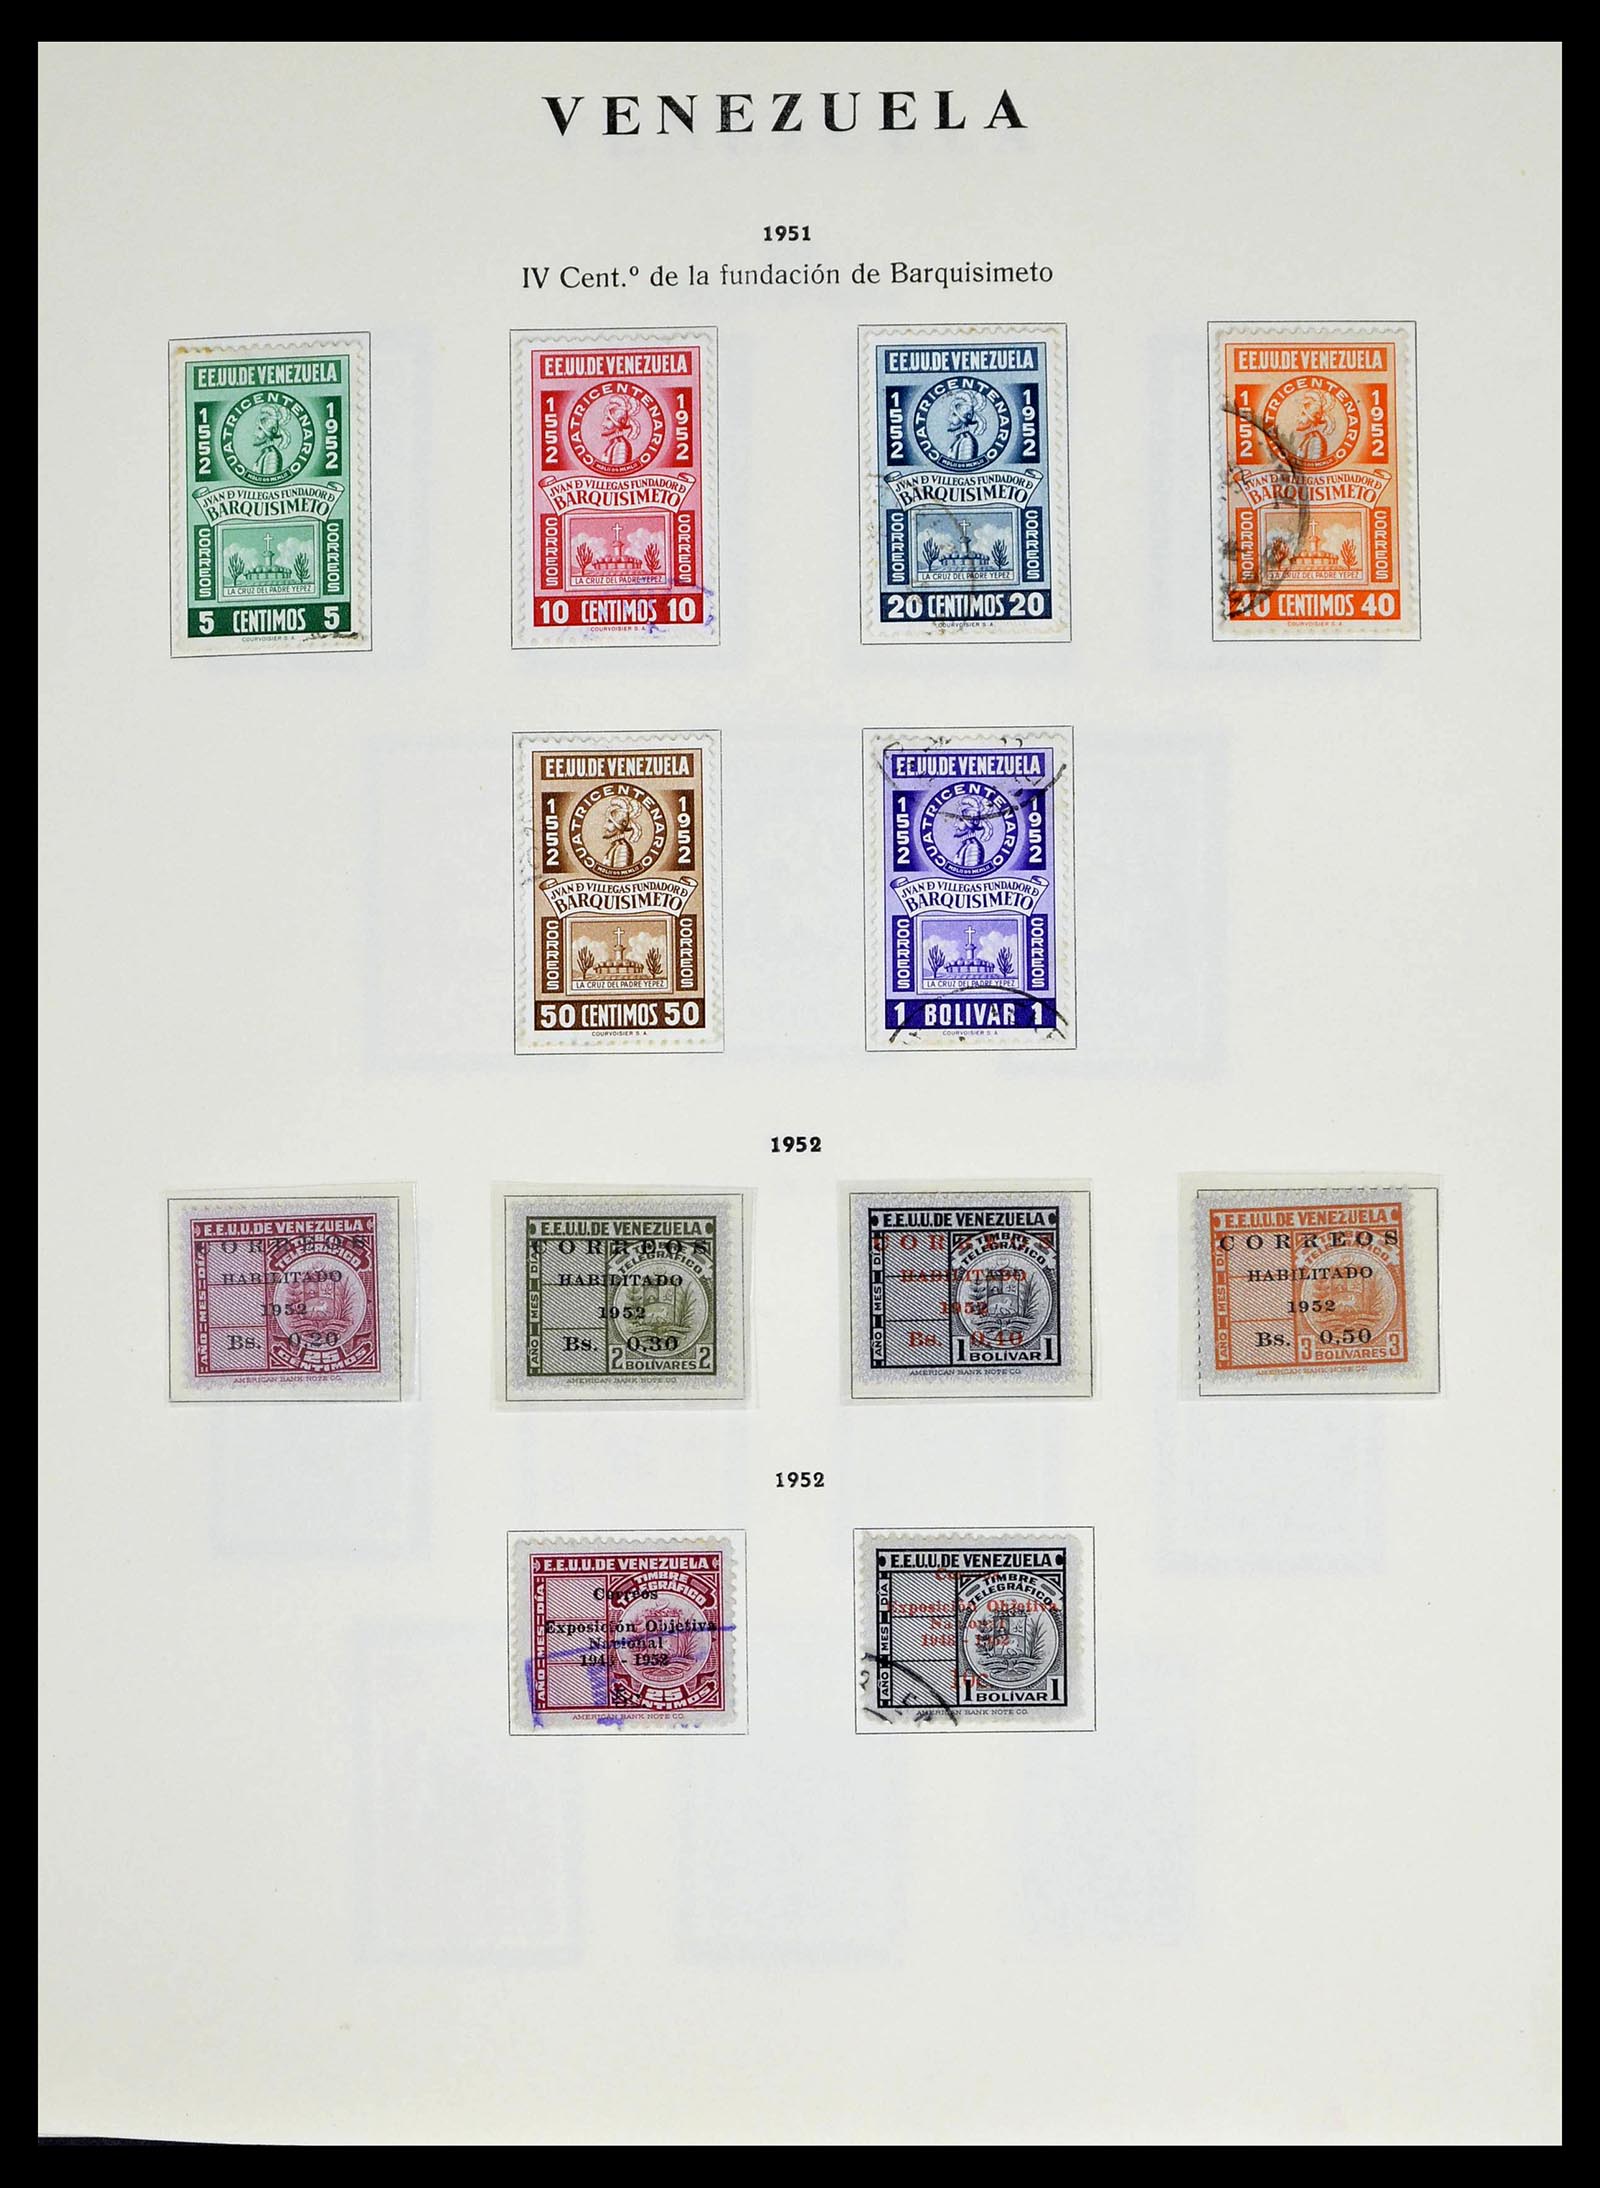 39223 0026 - Stamp collection 39223 Venezuela 1859-1984.